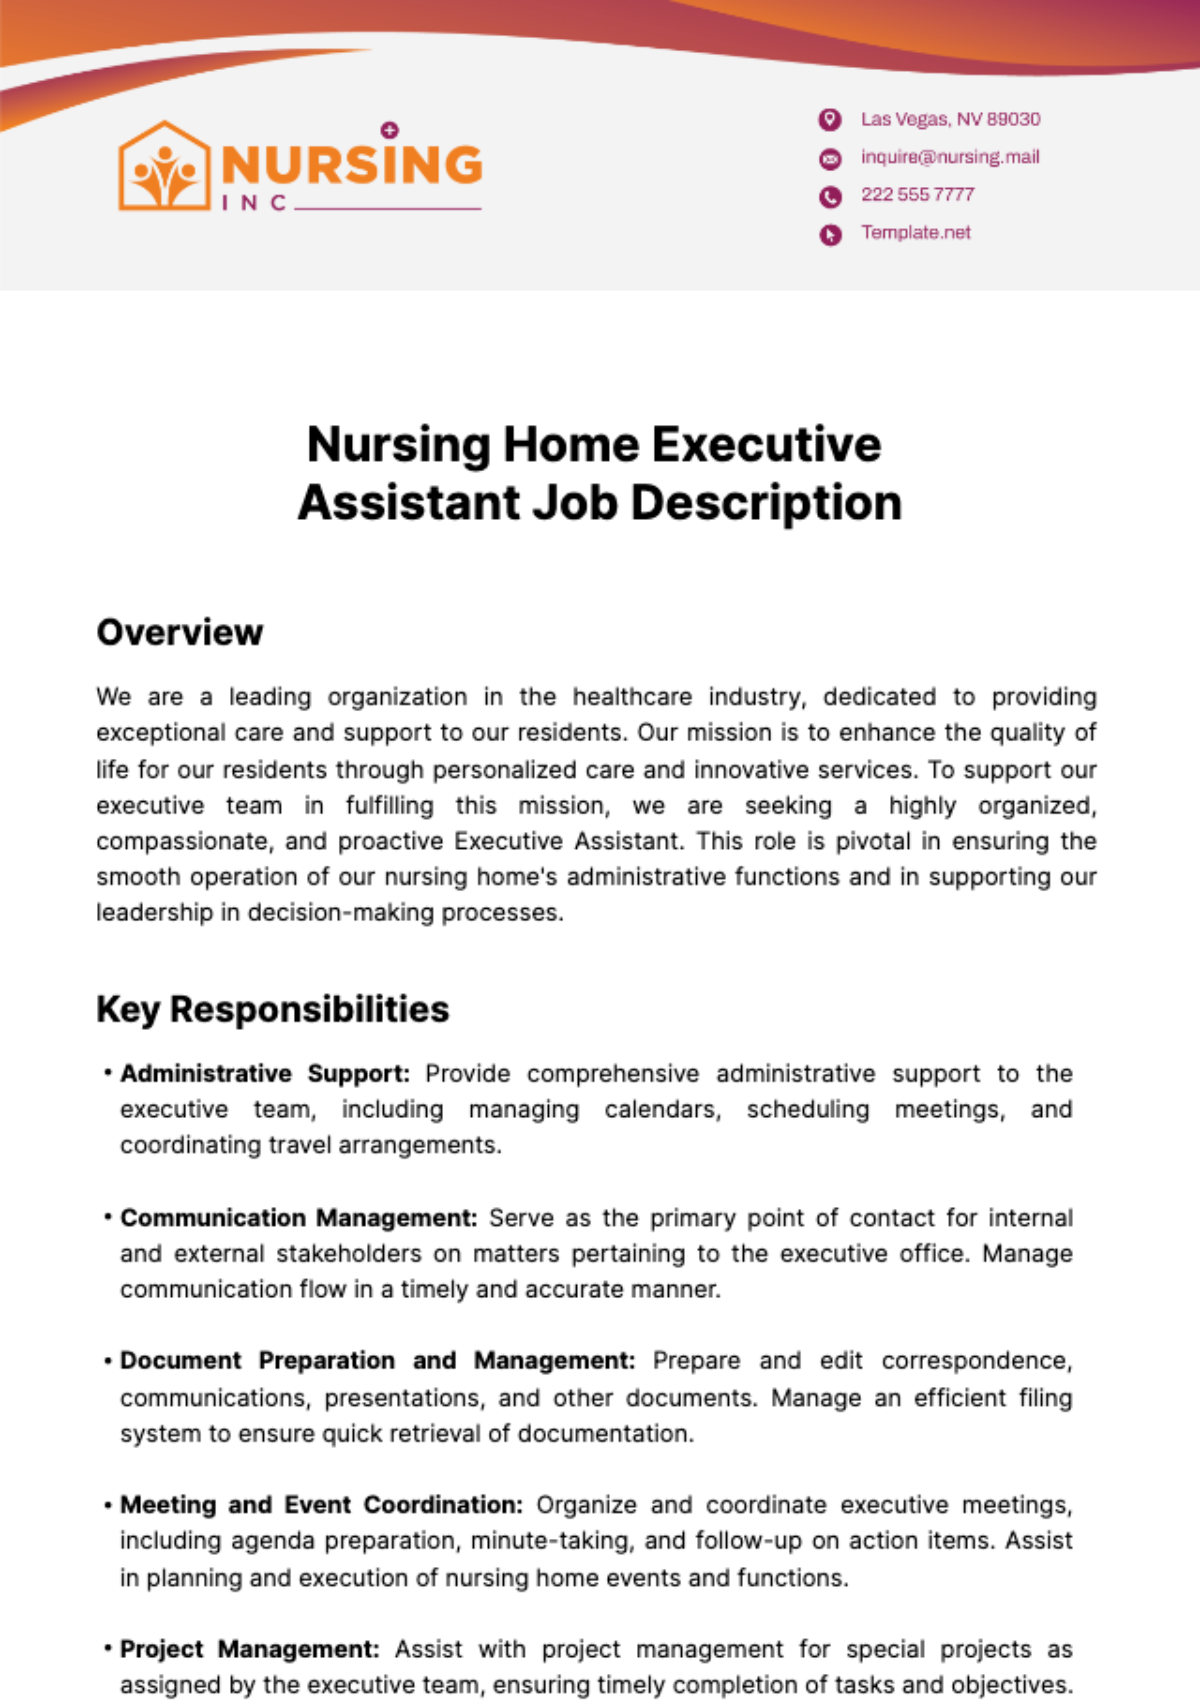 Nursing Home Executive Assistant Job Description Template